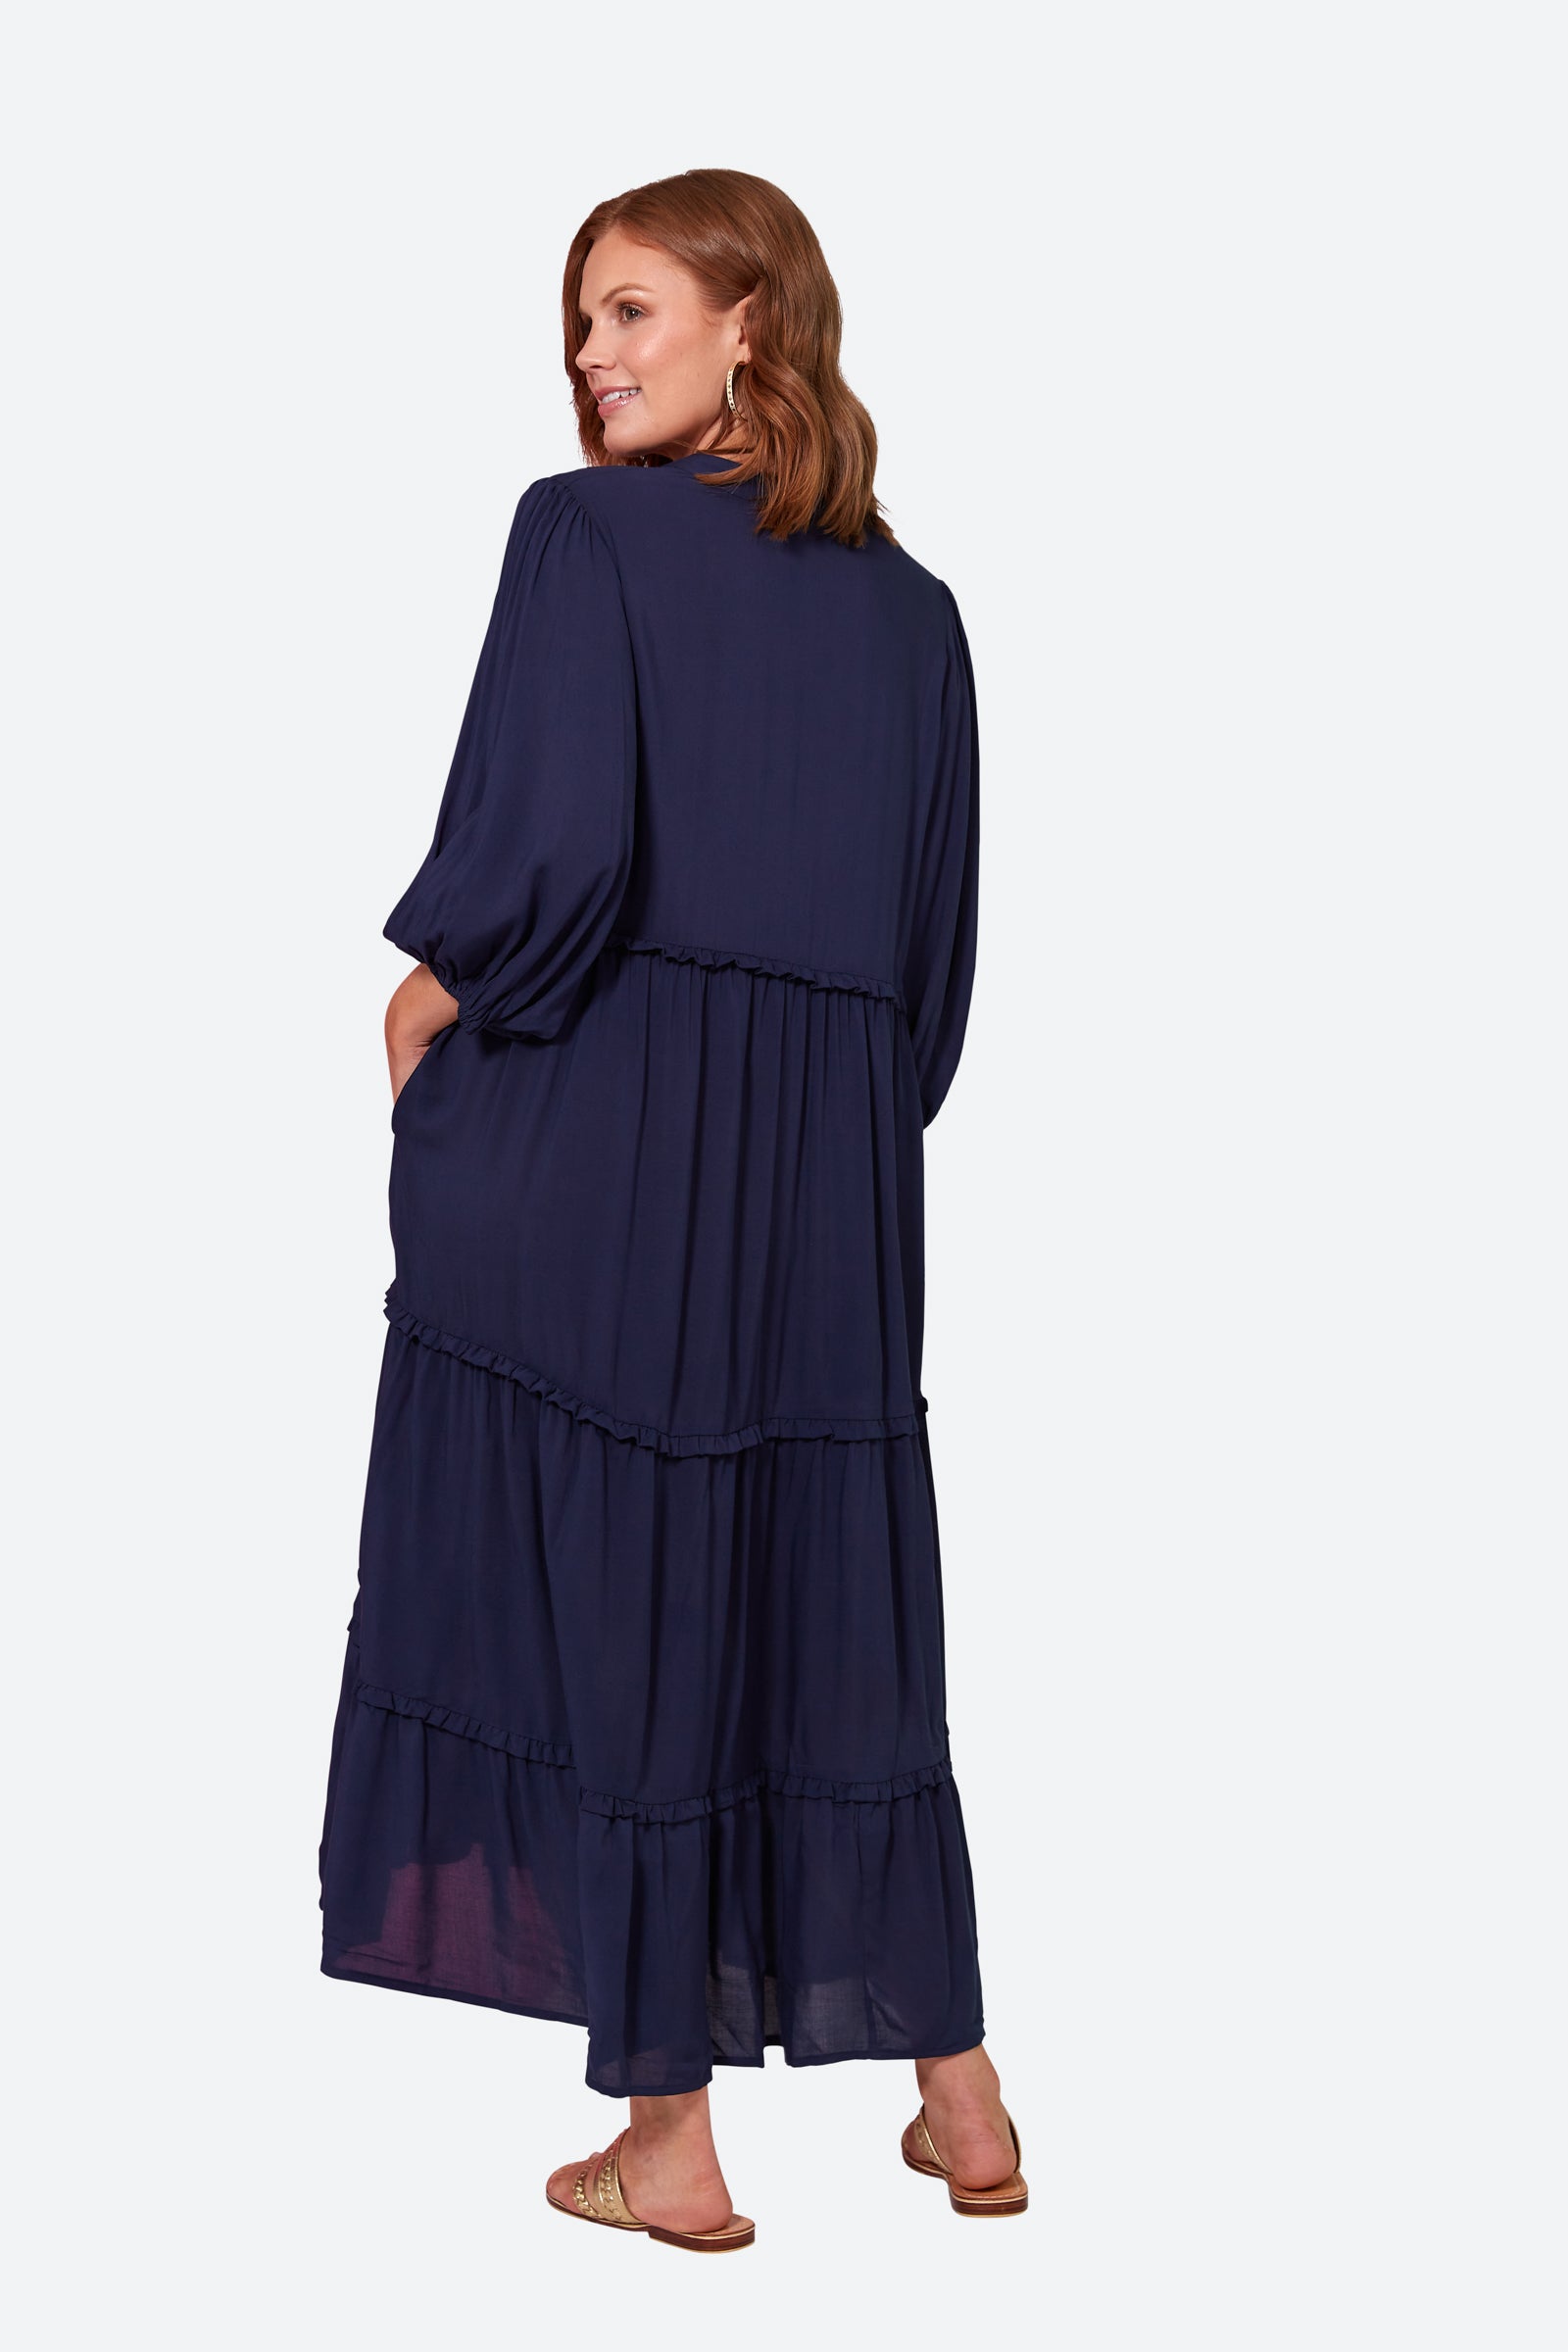 Esprit Tiered Dress - Sapphire - eb&ive Clothing - Dress 3/4 Length Linen